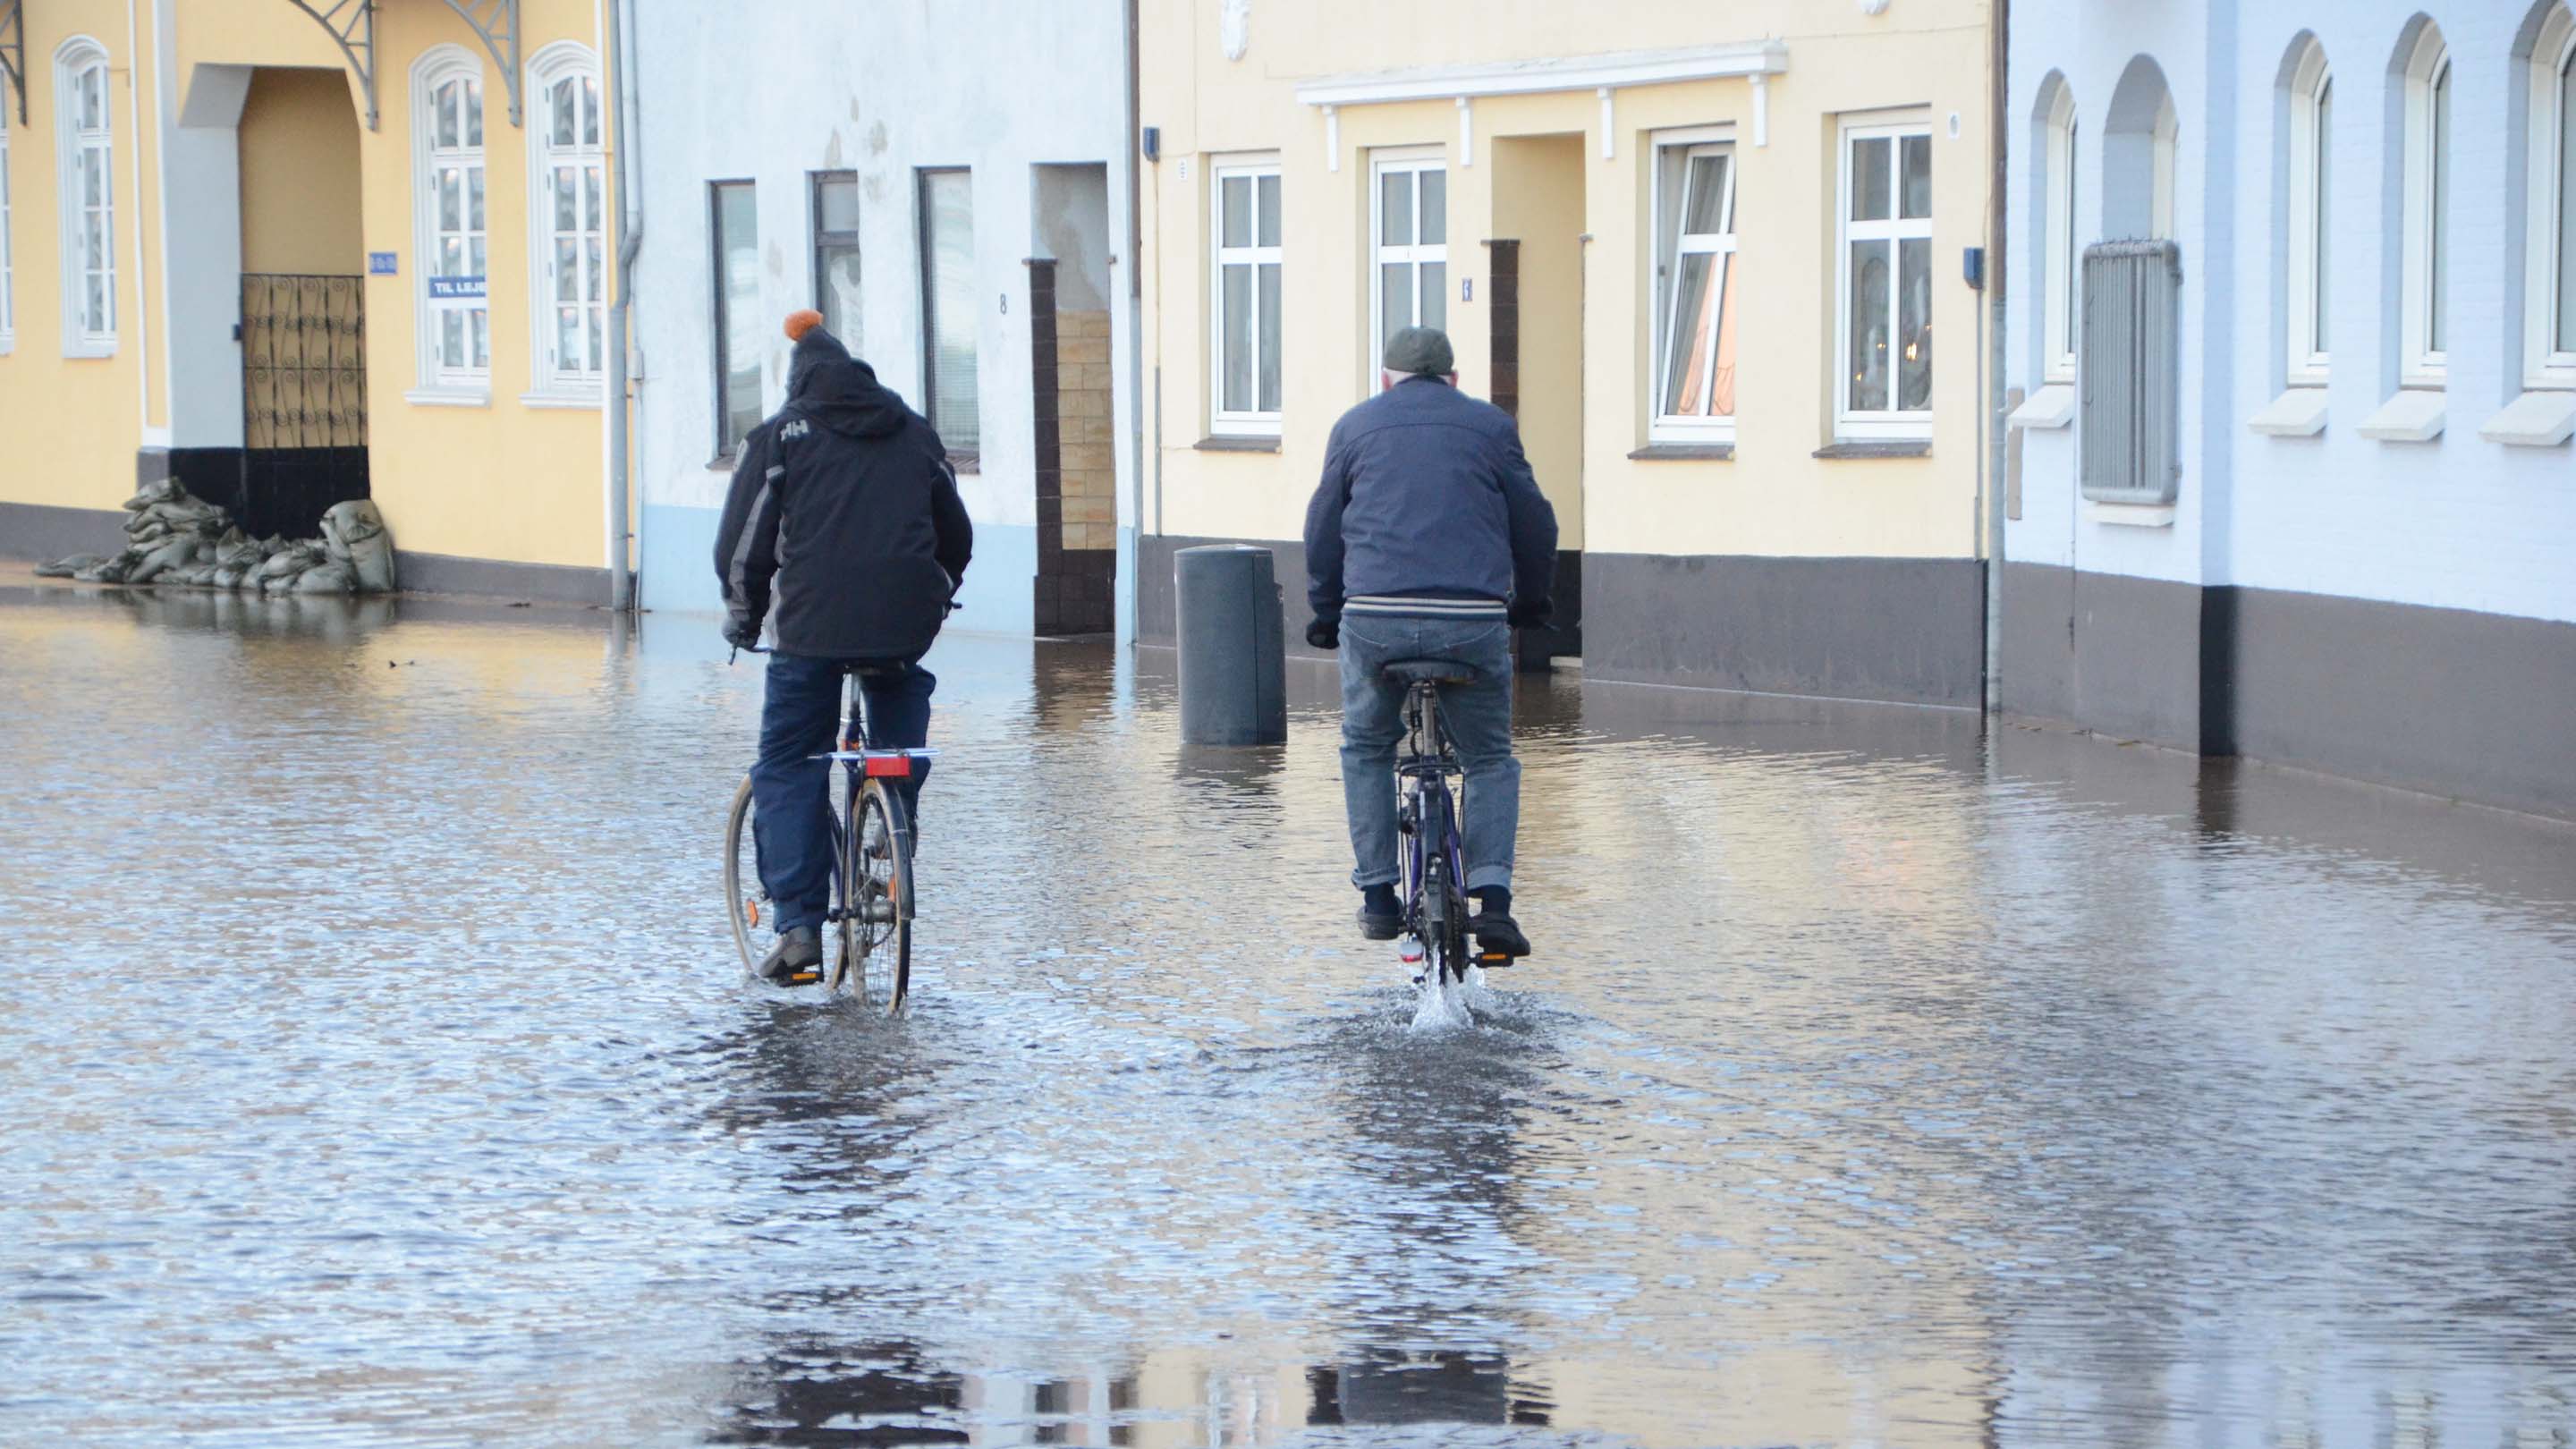 Two men riding bikes through flood water in a town.